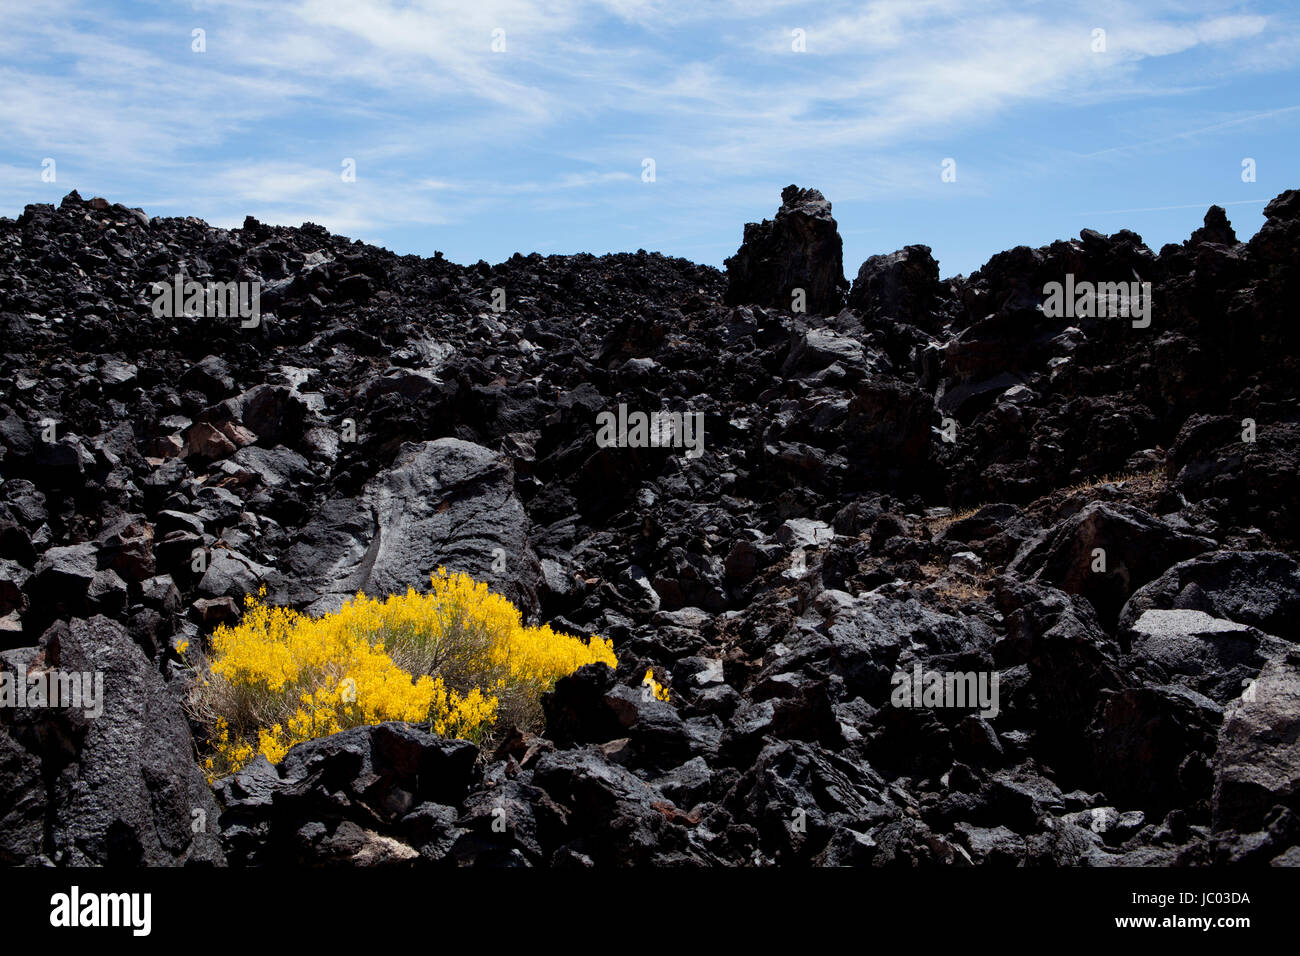 Brittlebush (Encella farinosa) growing on dark volcanic lava rock formation - Mojave desert, California USA Stock Photo